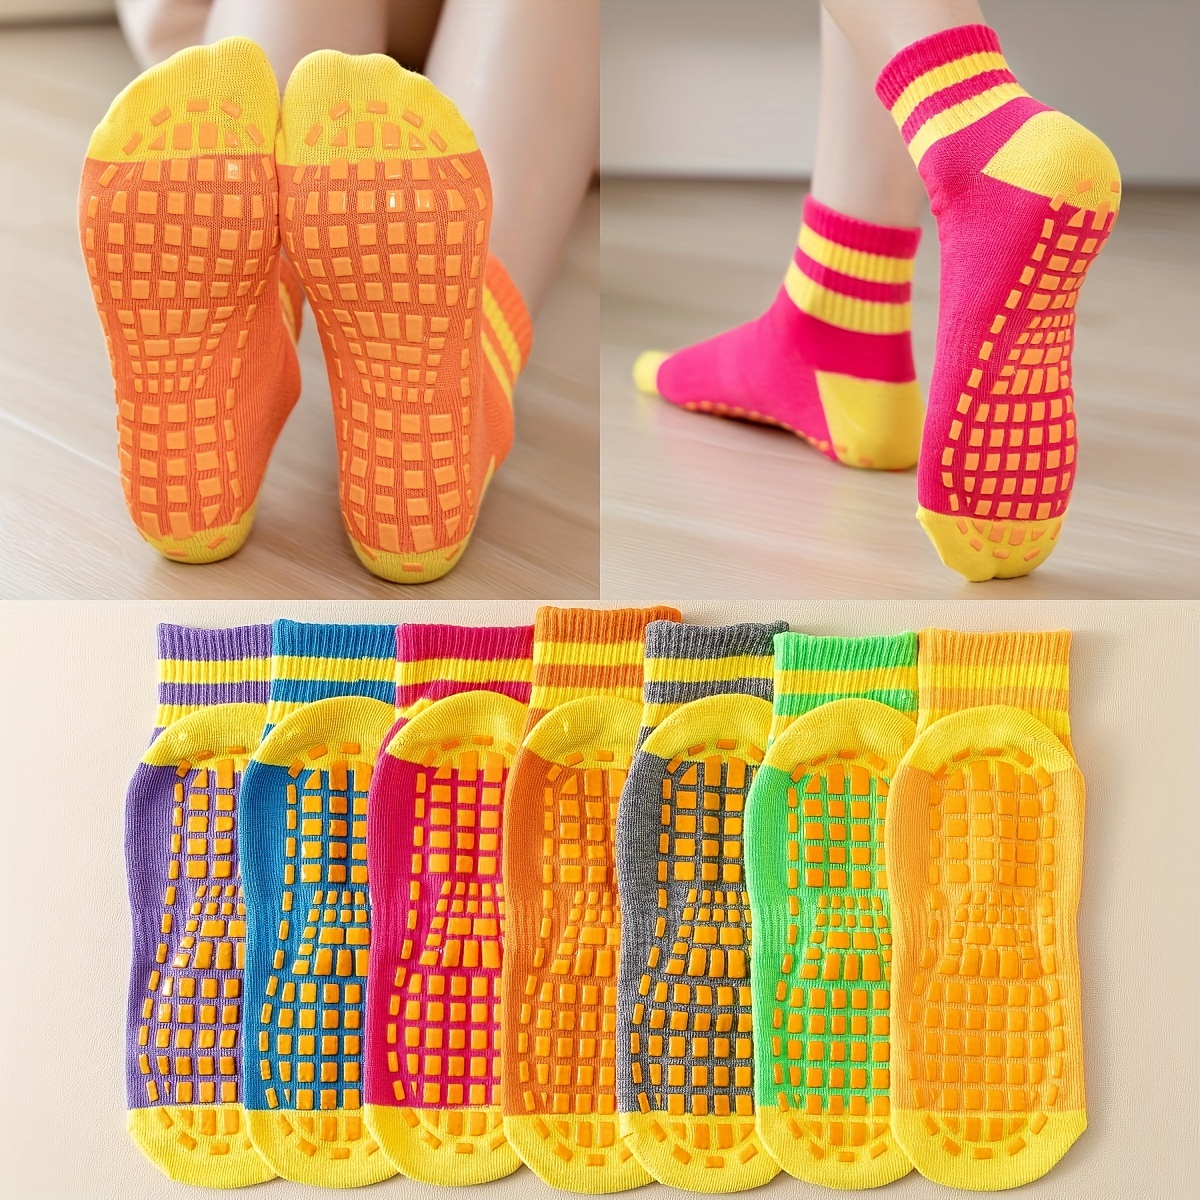 Grip Anti-Slip Socks (Yellow)